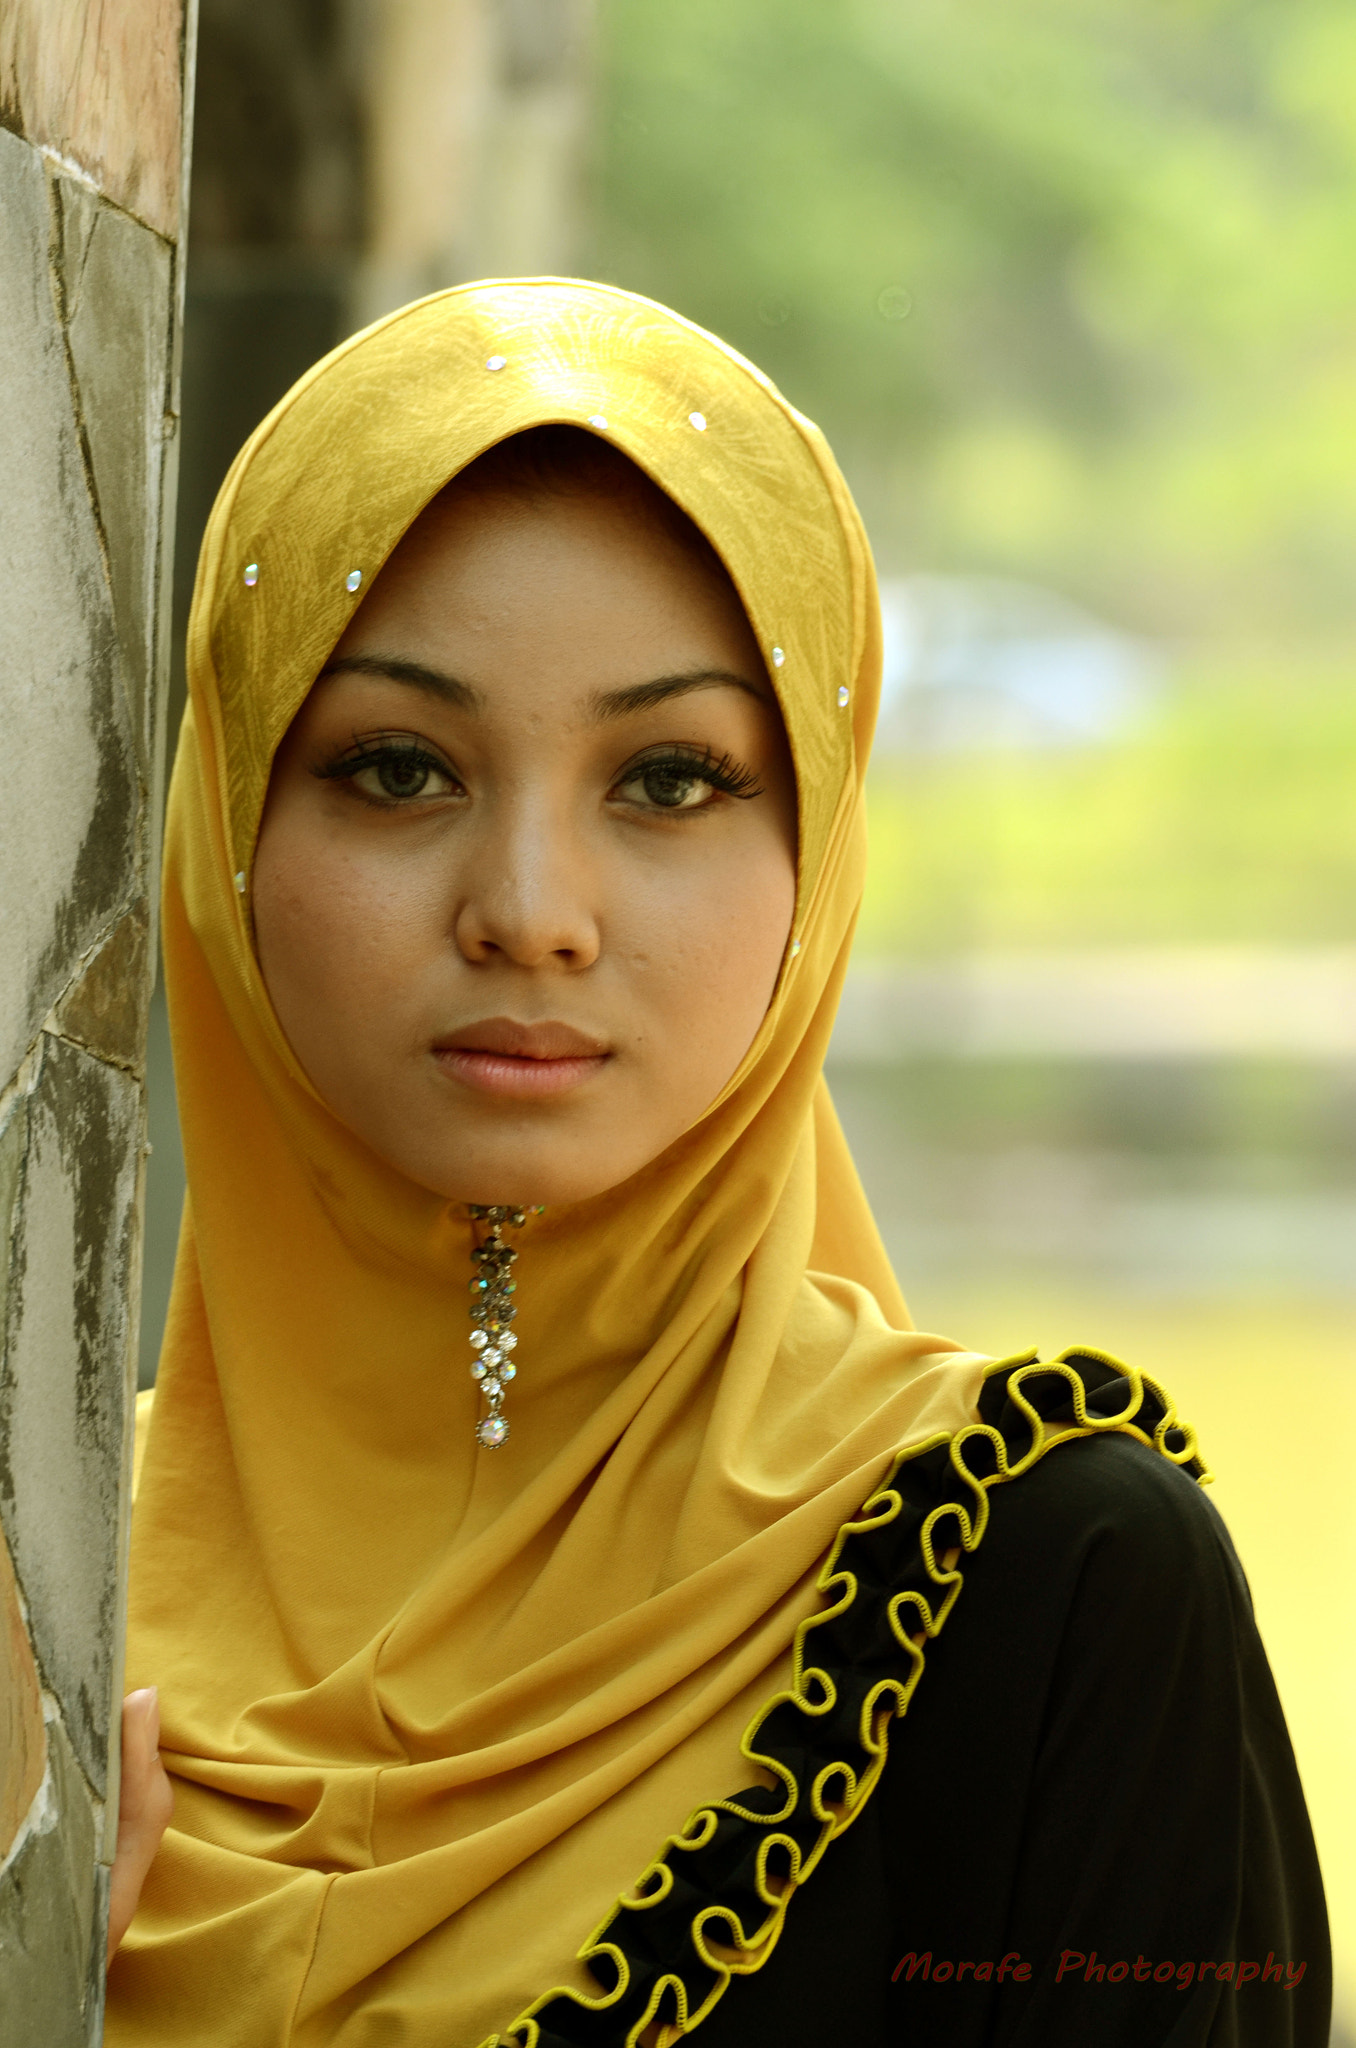 Download Hijab Model by Morafe - Photo 30489221 / 500px